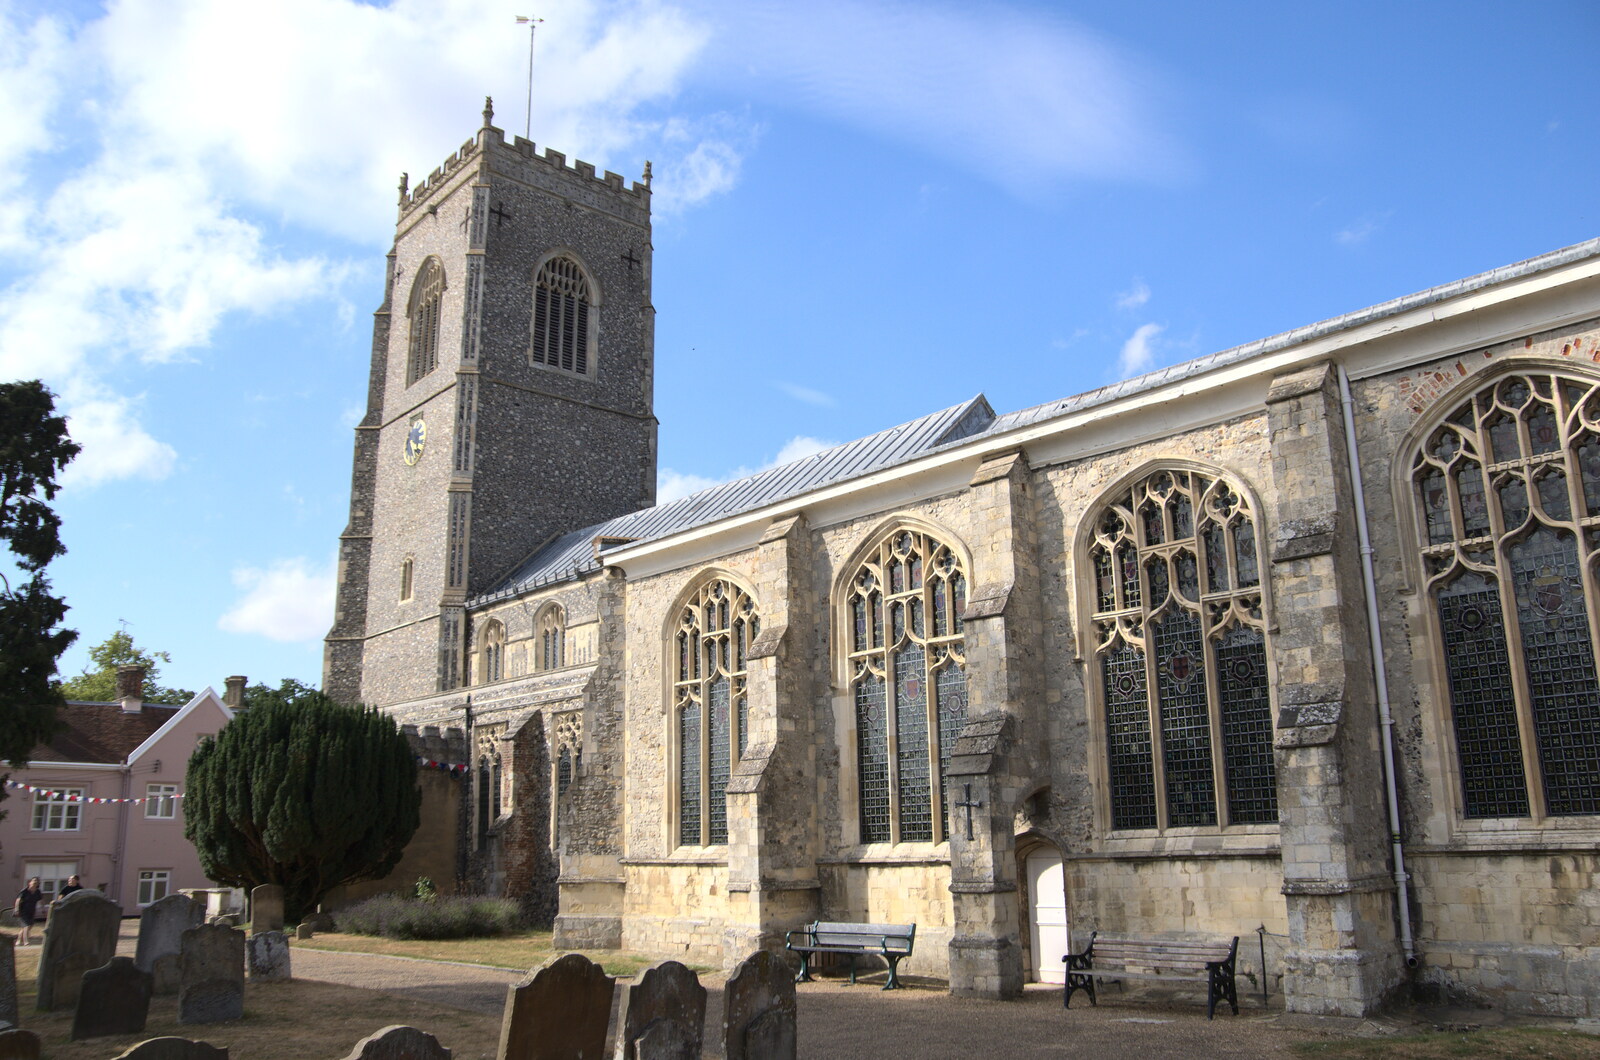 A Trip to Framlingham, Suffolk - 28th July 2022: St. Michael's Church